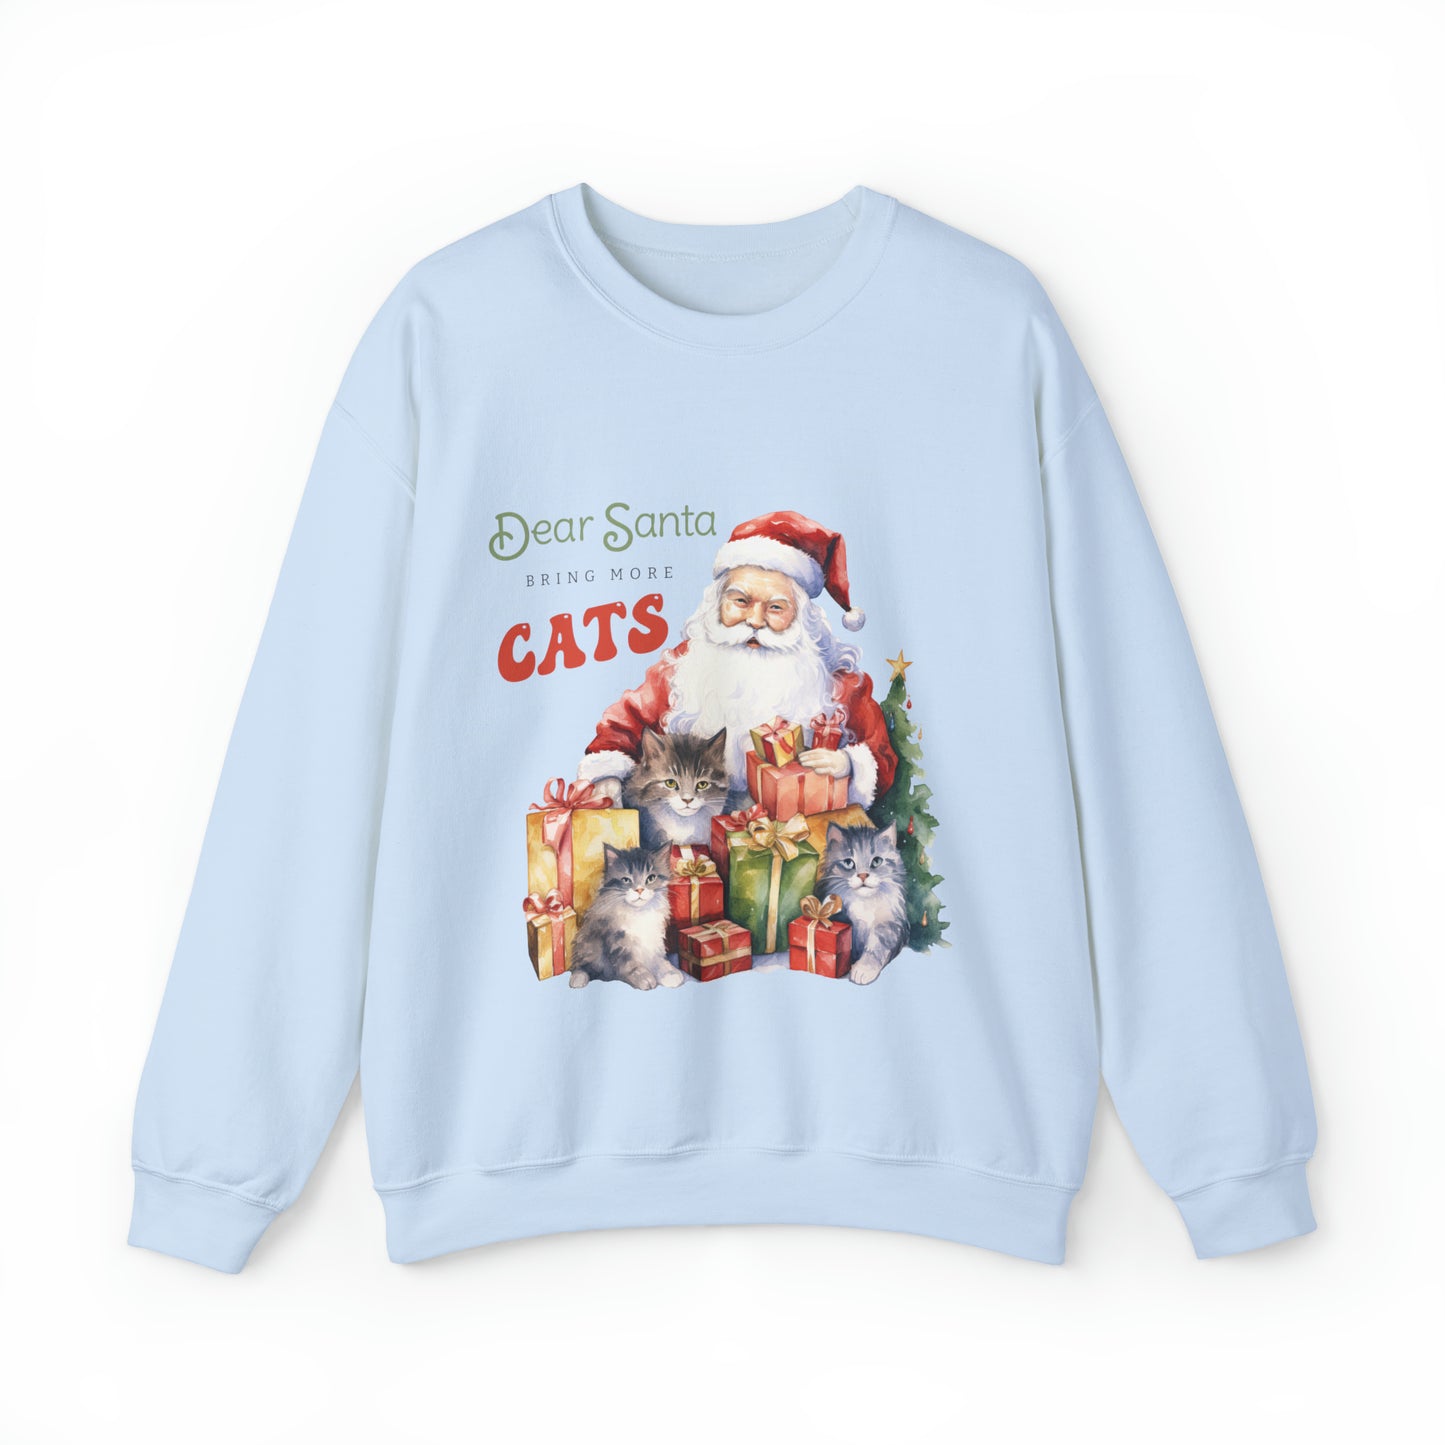 Dear Santa, Bring More Cats Women's Christmas Sweatshirt